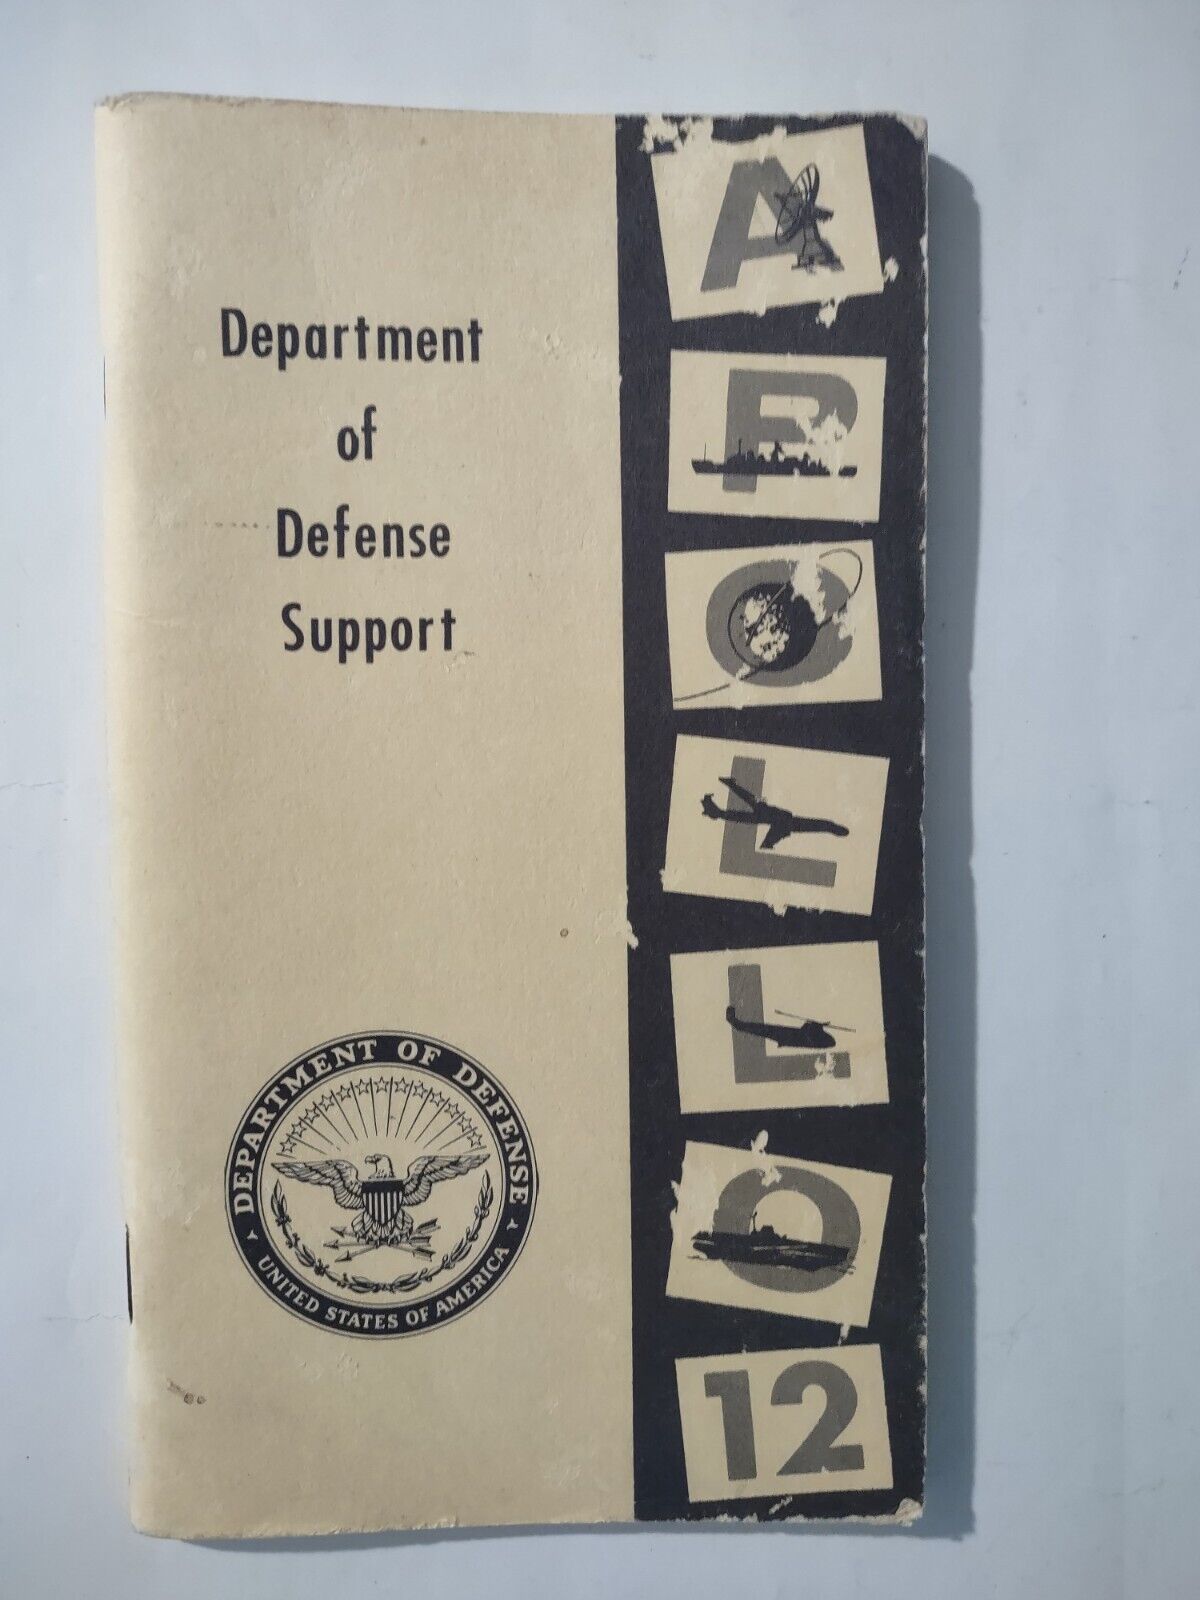 Very Rare Apollo 12 NASA Department of Defense Support Booklet Press Kit